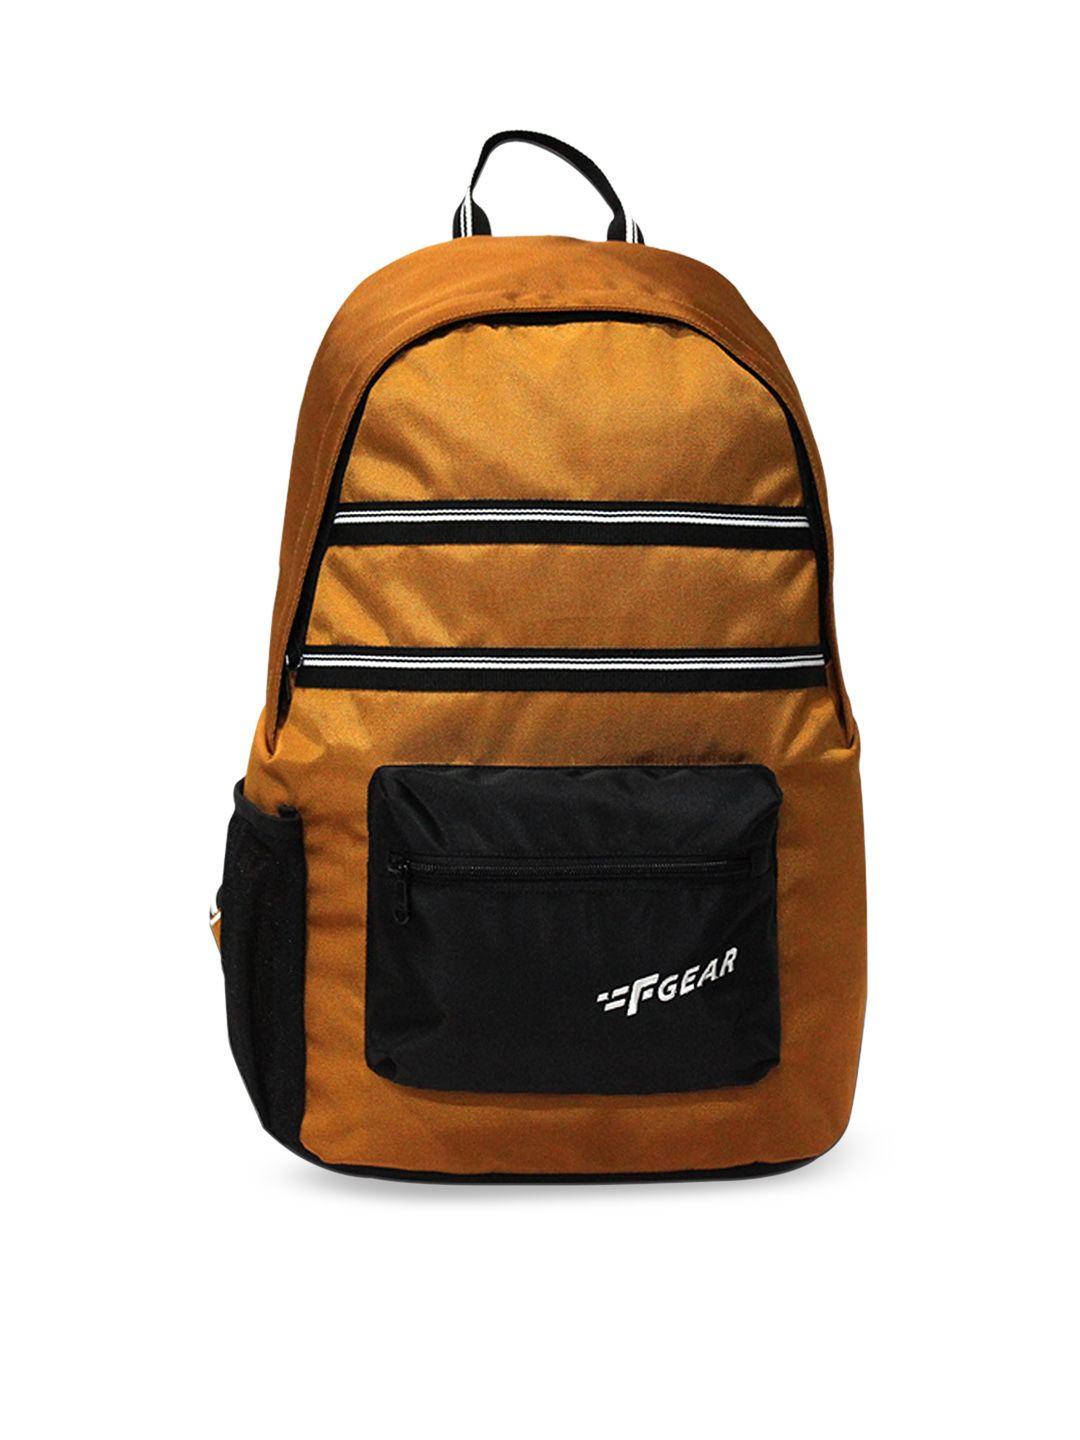 f gear unisex mustard & black solid backpack